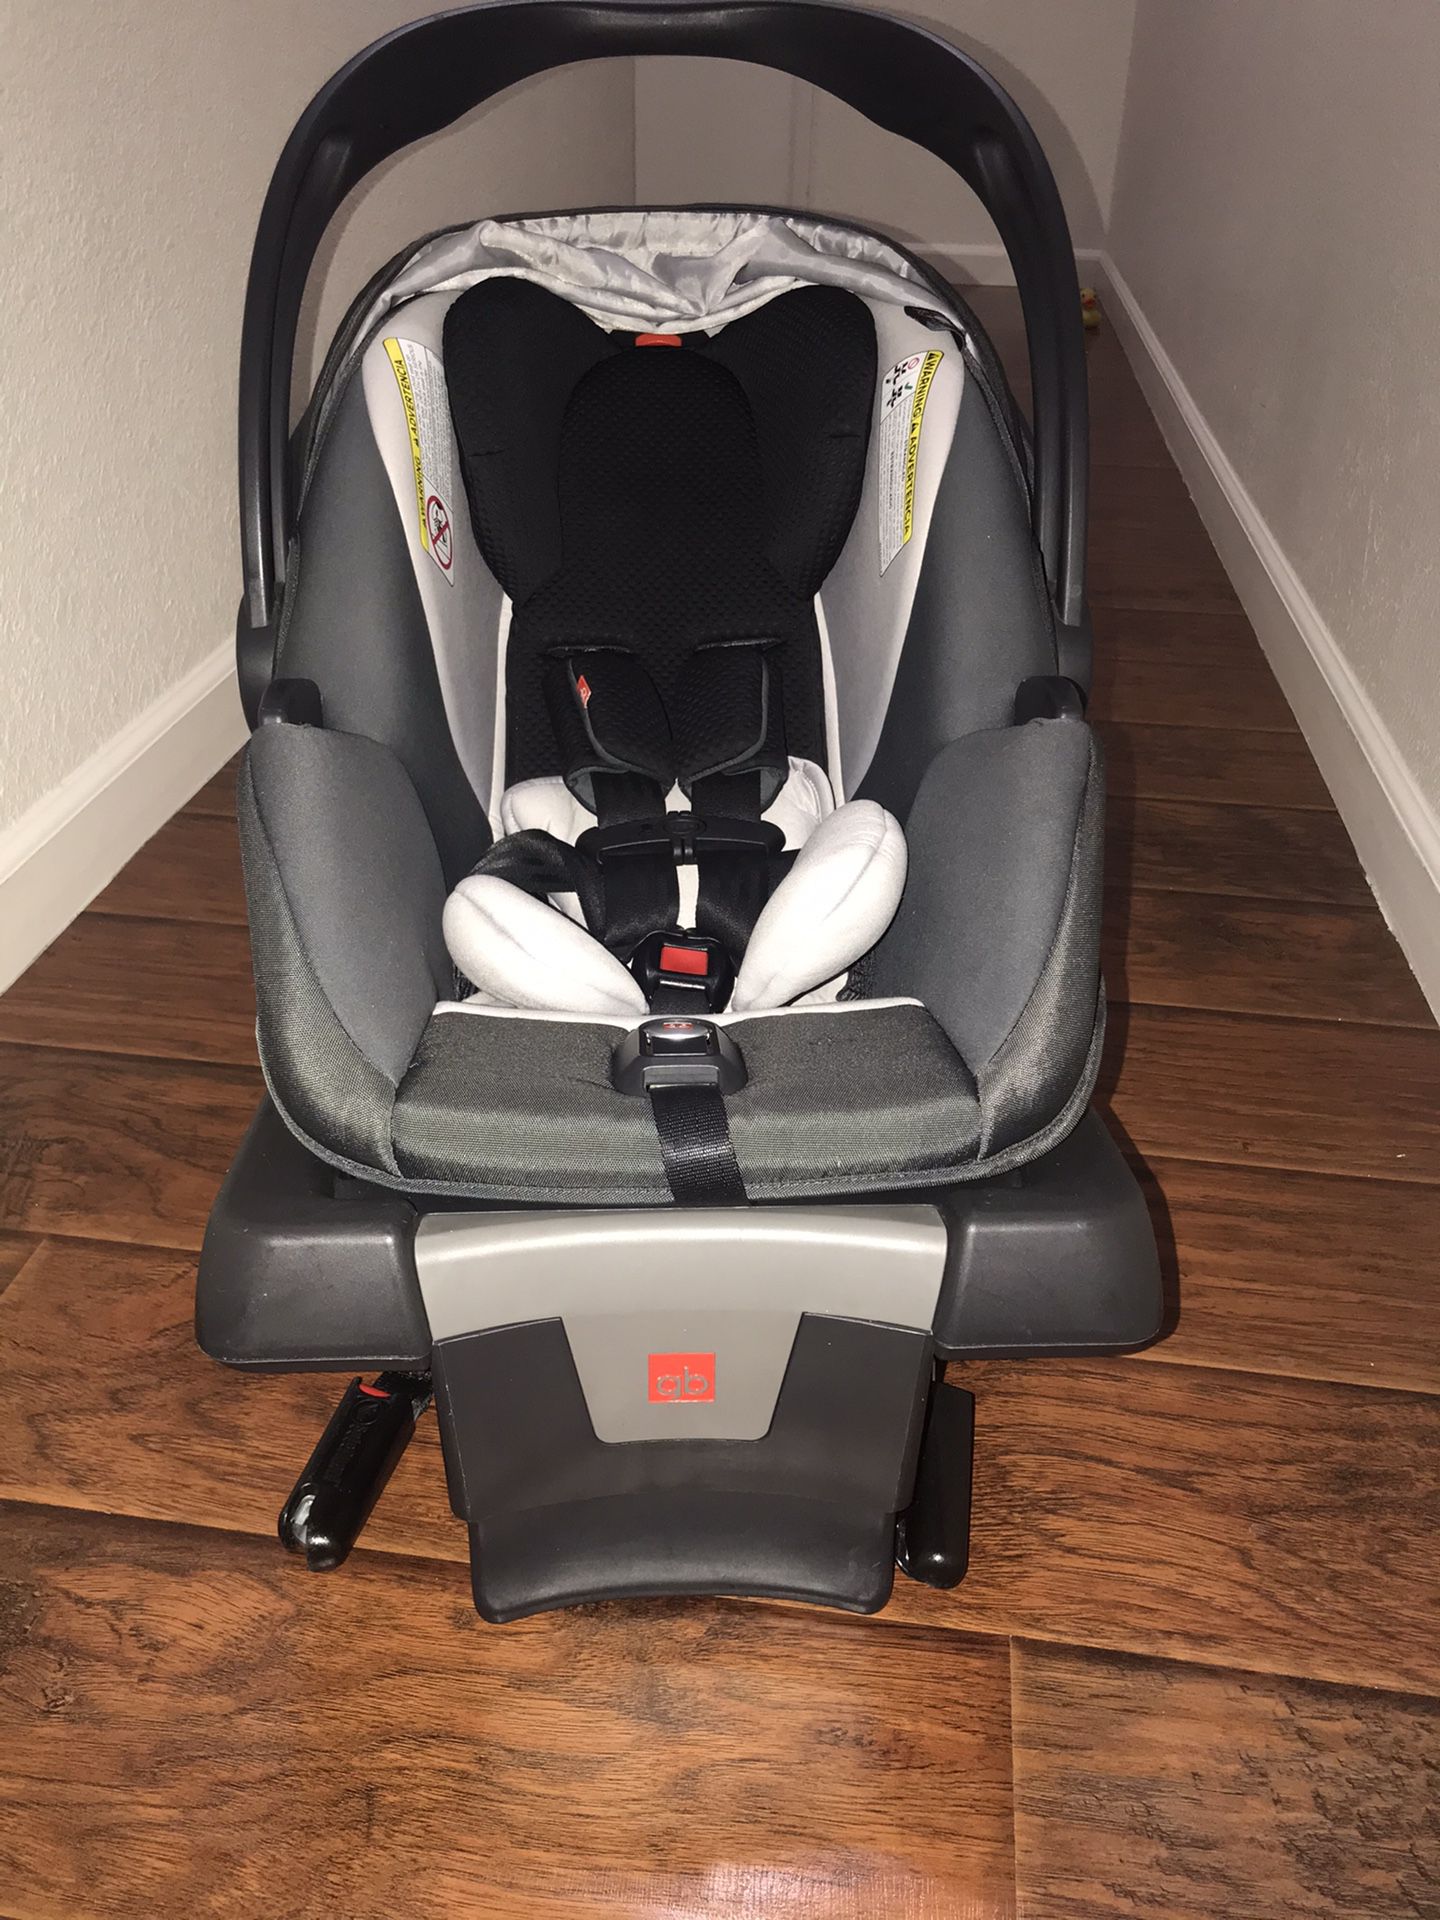 GB asana infant car seat